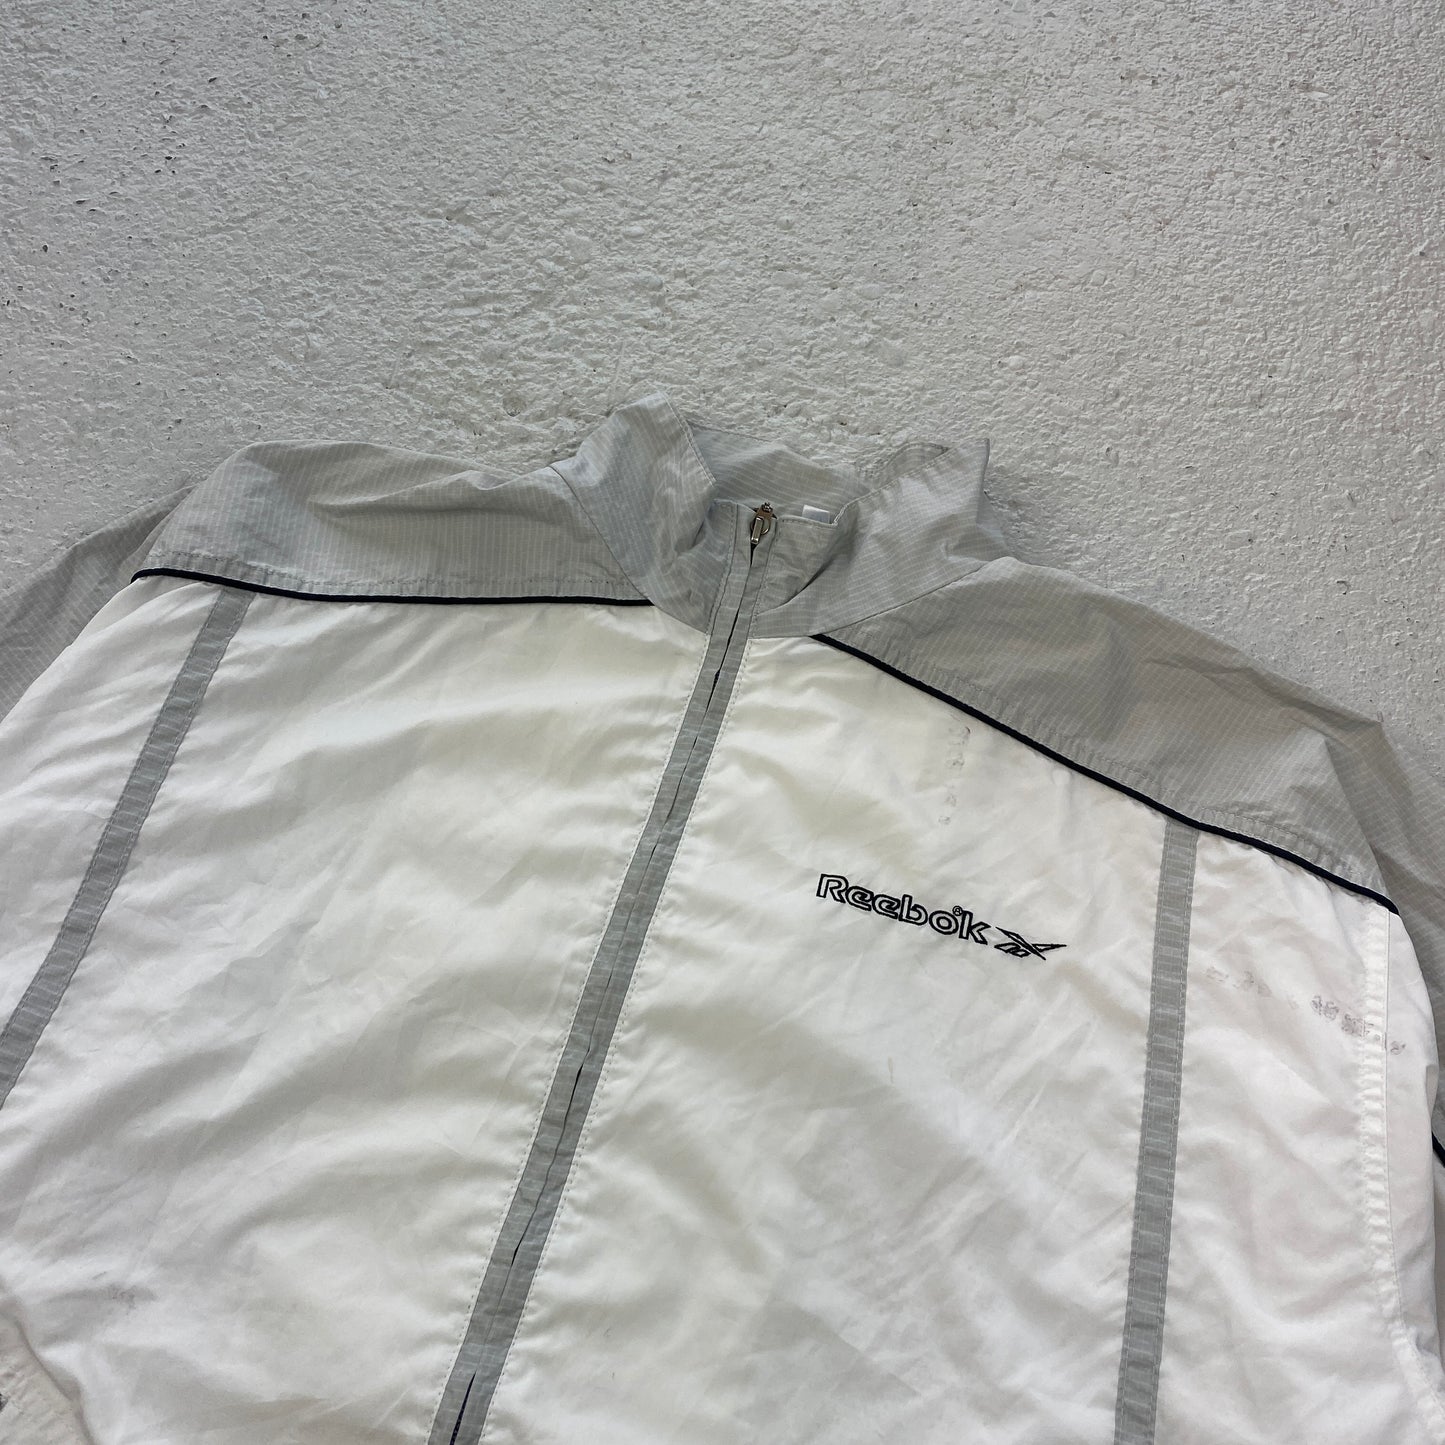 Reebok track jacket (M)